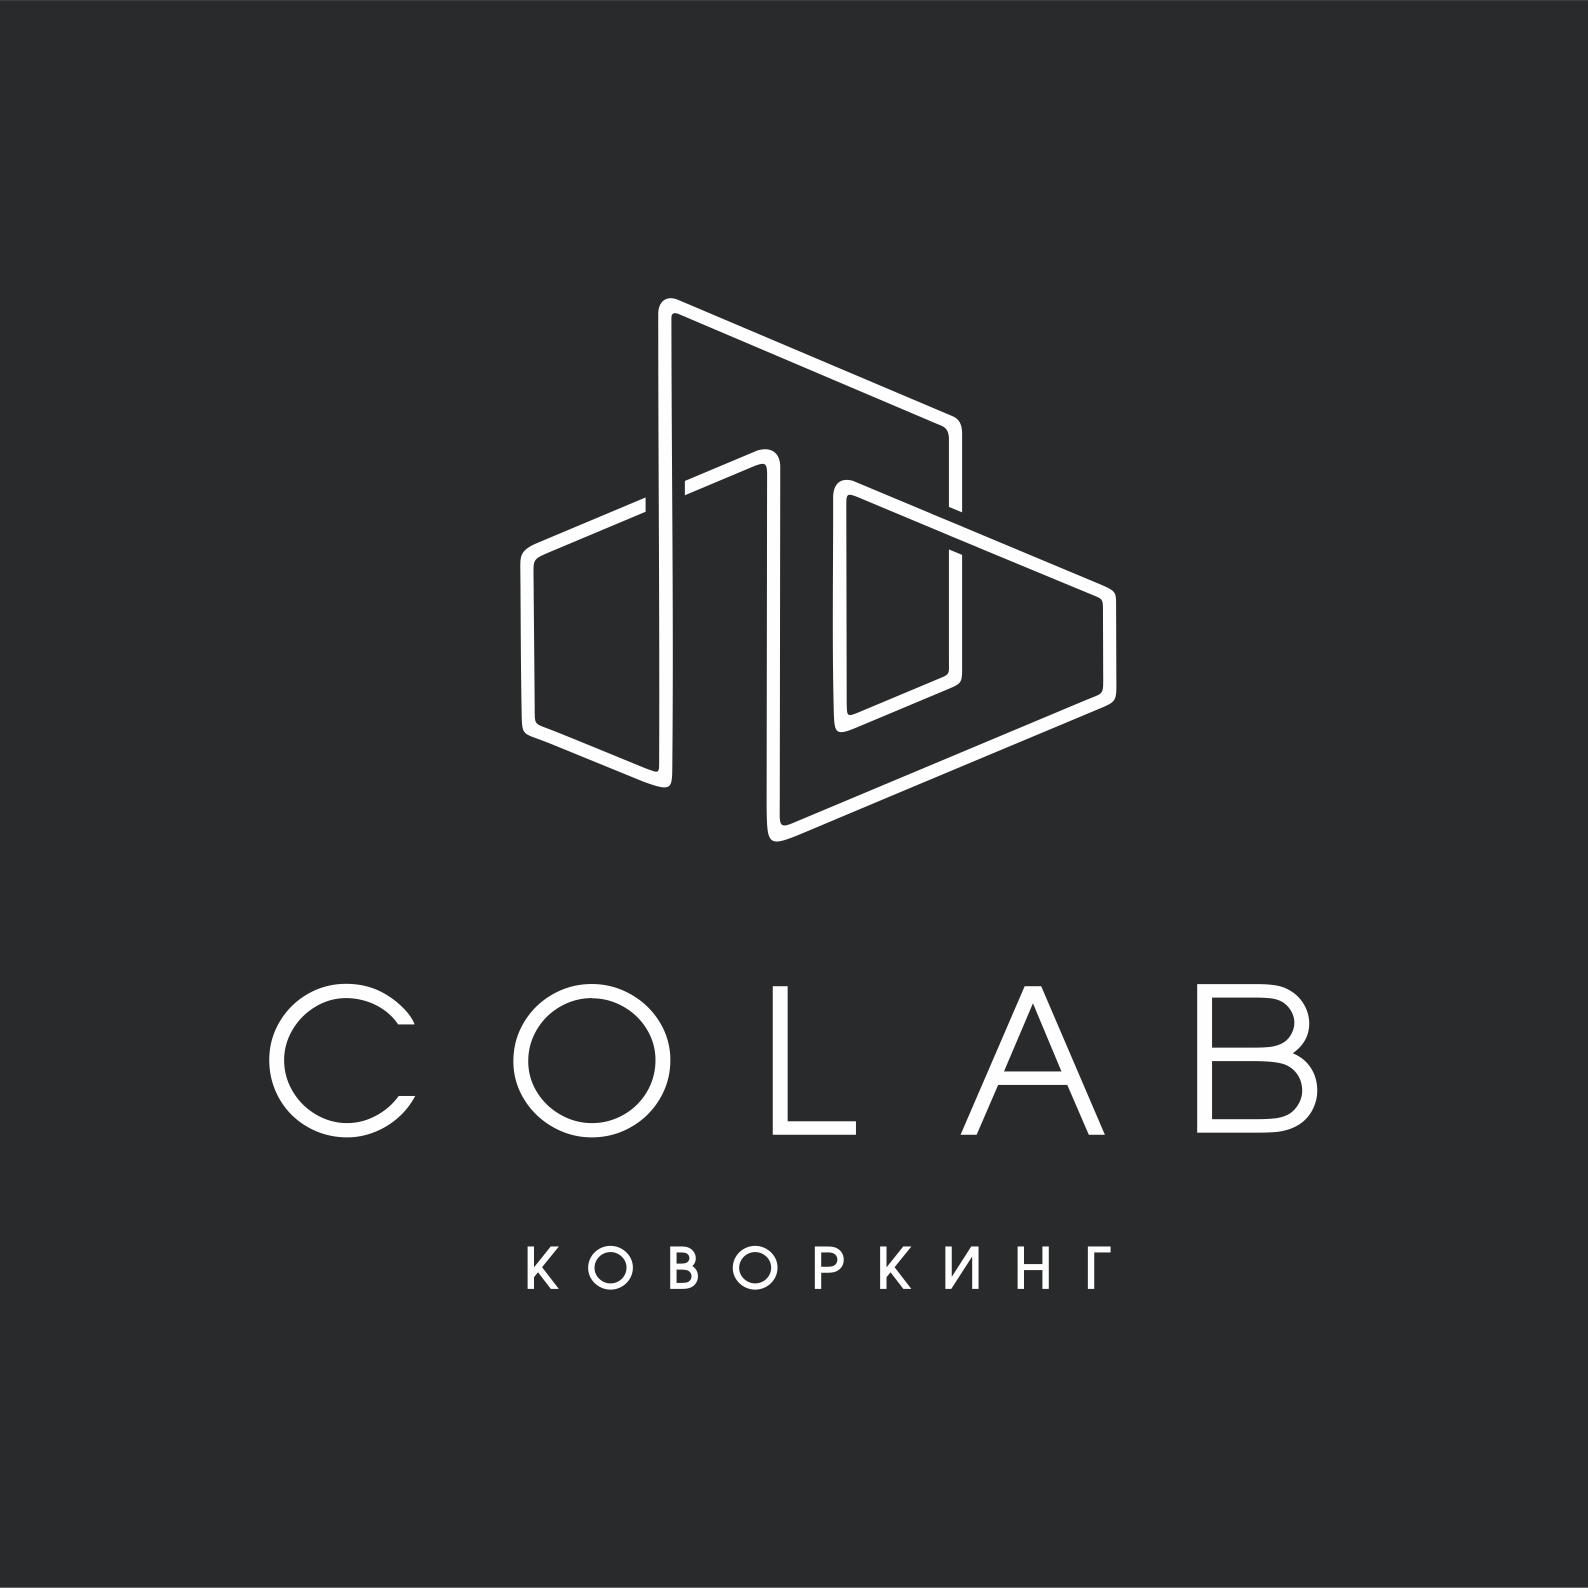 Colab (Колаб)